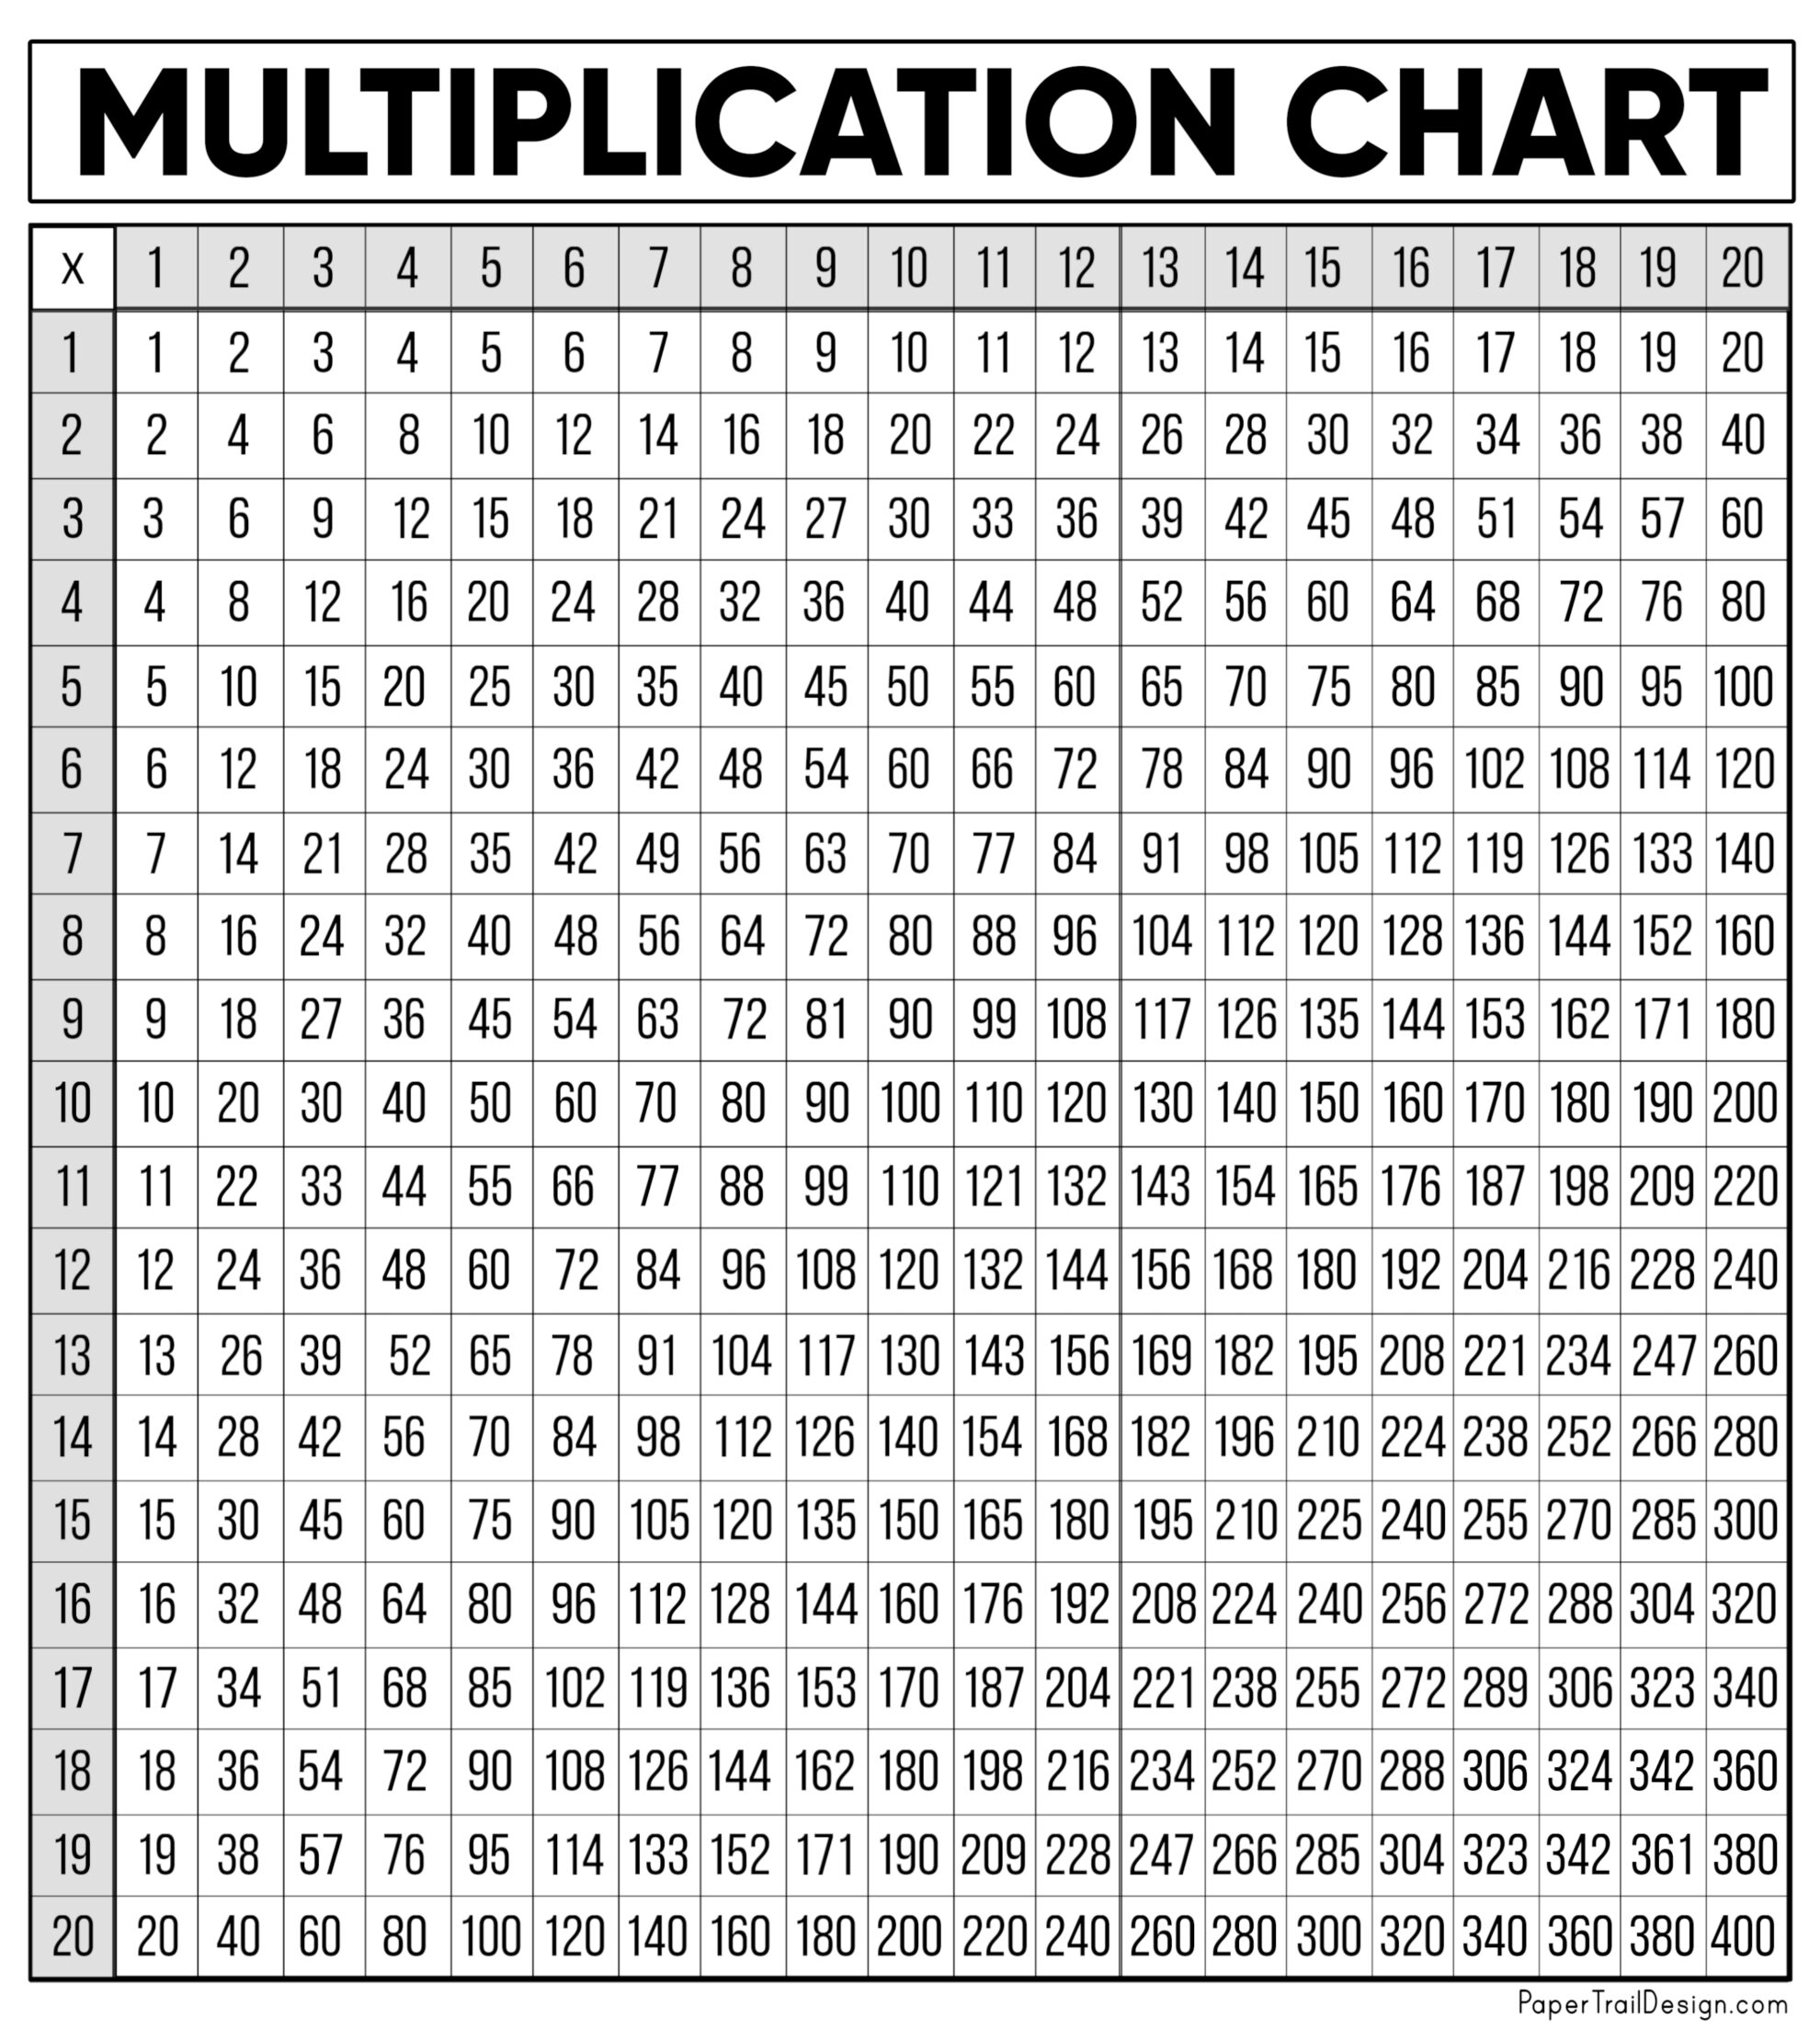 printable-multiplication-tables-free-printable-multiplication-table